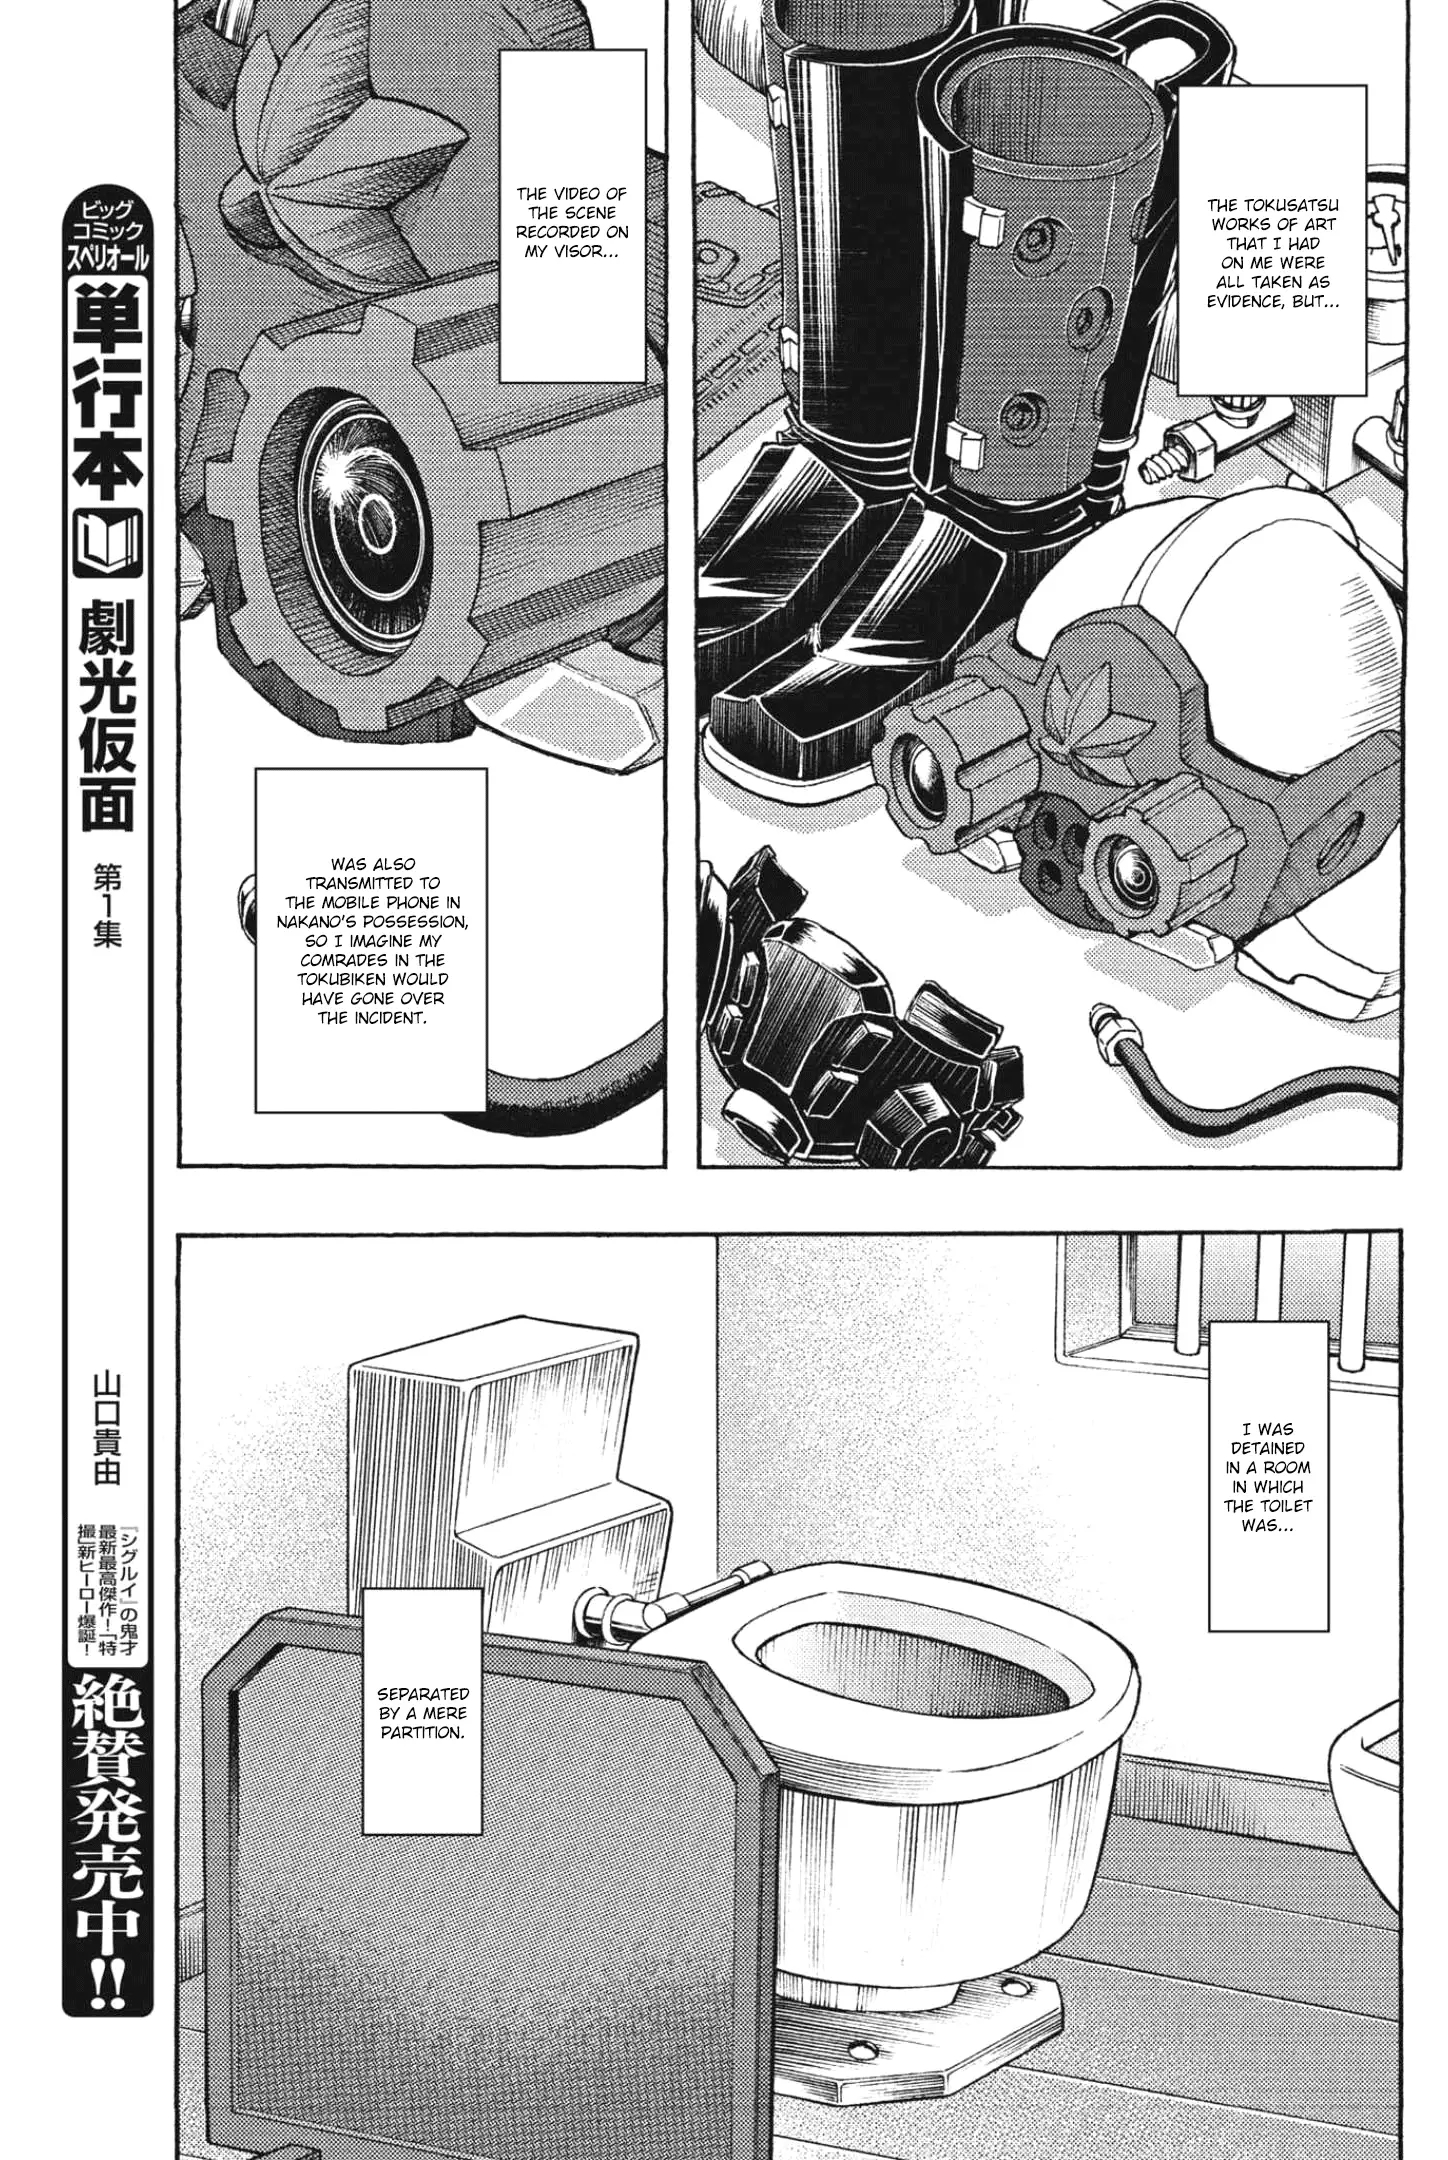 Gekikou Kamen - 15 page 9-0f63b023